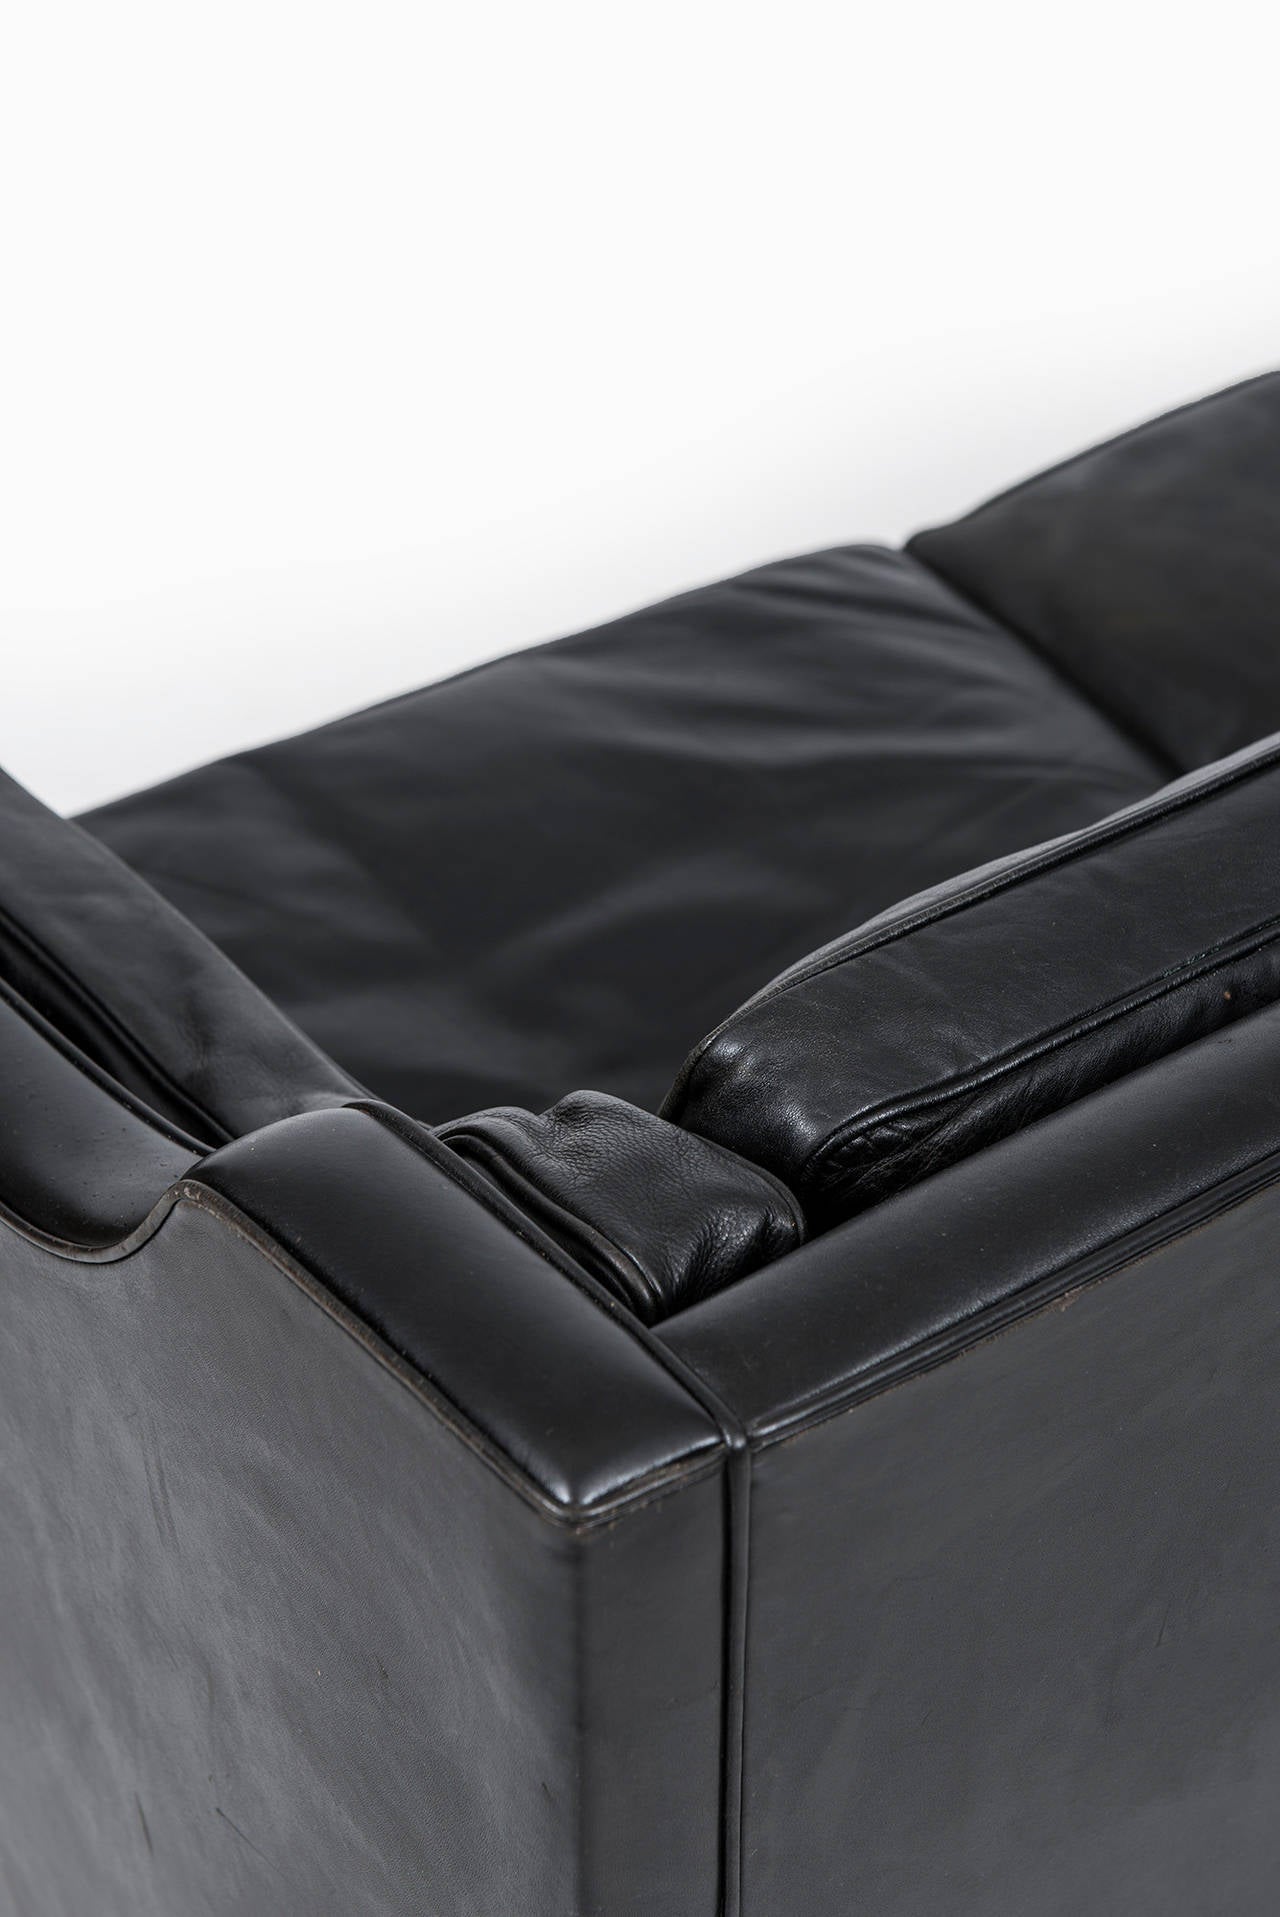 Børge Mogensen 2213 Leather Sofa by Fredericia Stolefabrik in Denmark 2